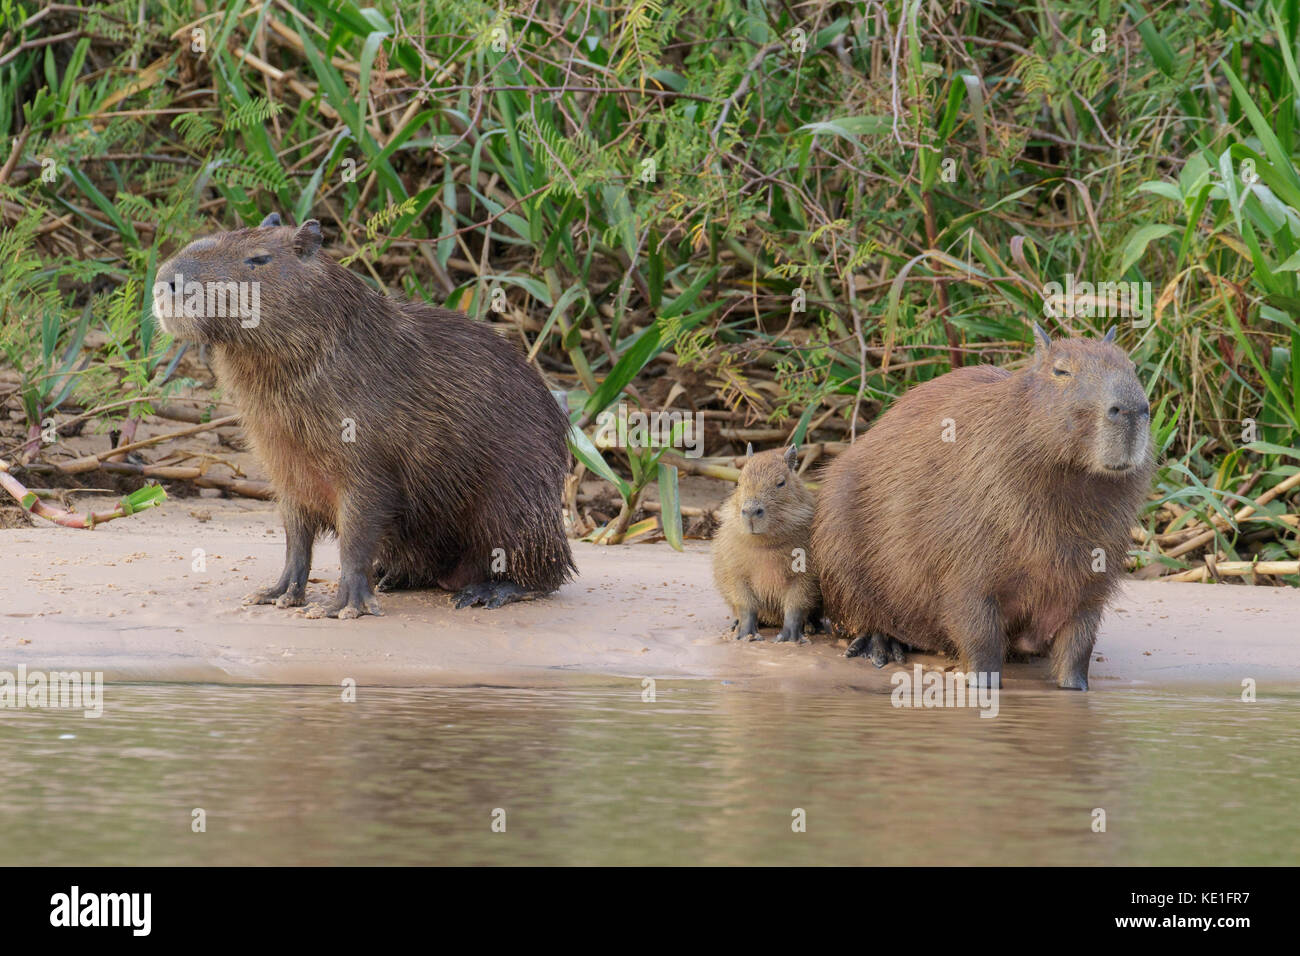 Capybara near a river in the Pantanal region of Brazil Stock Photo